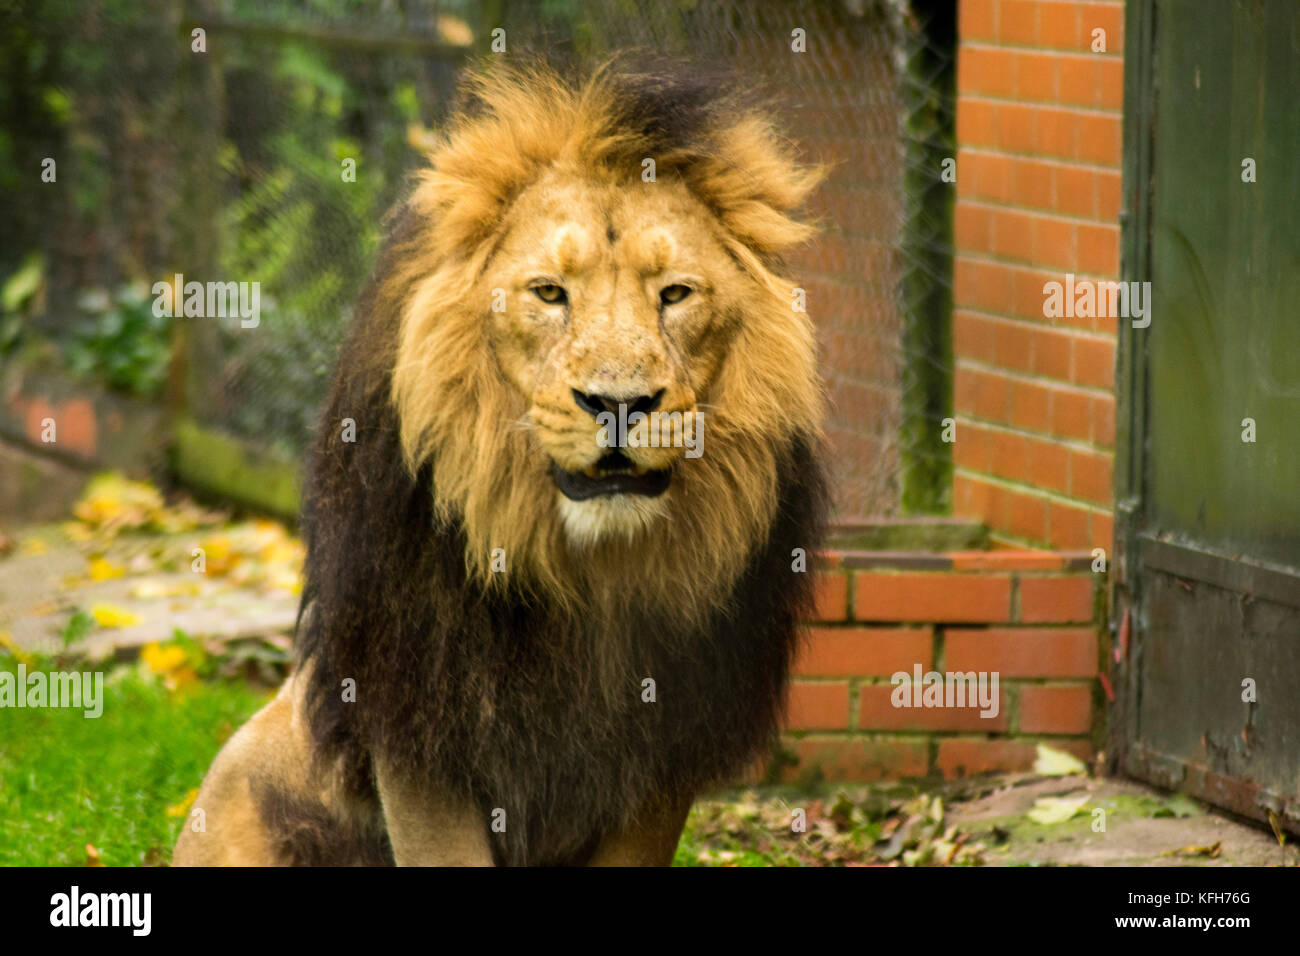 Lion portrait on black background. Big adult lion with rich mane Stock Photo